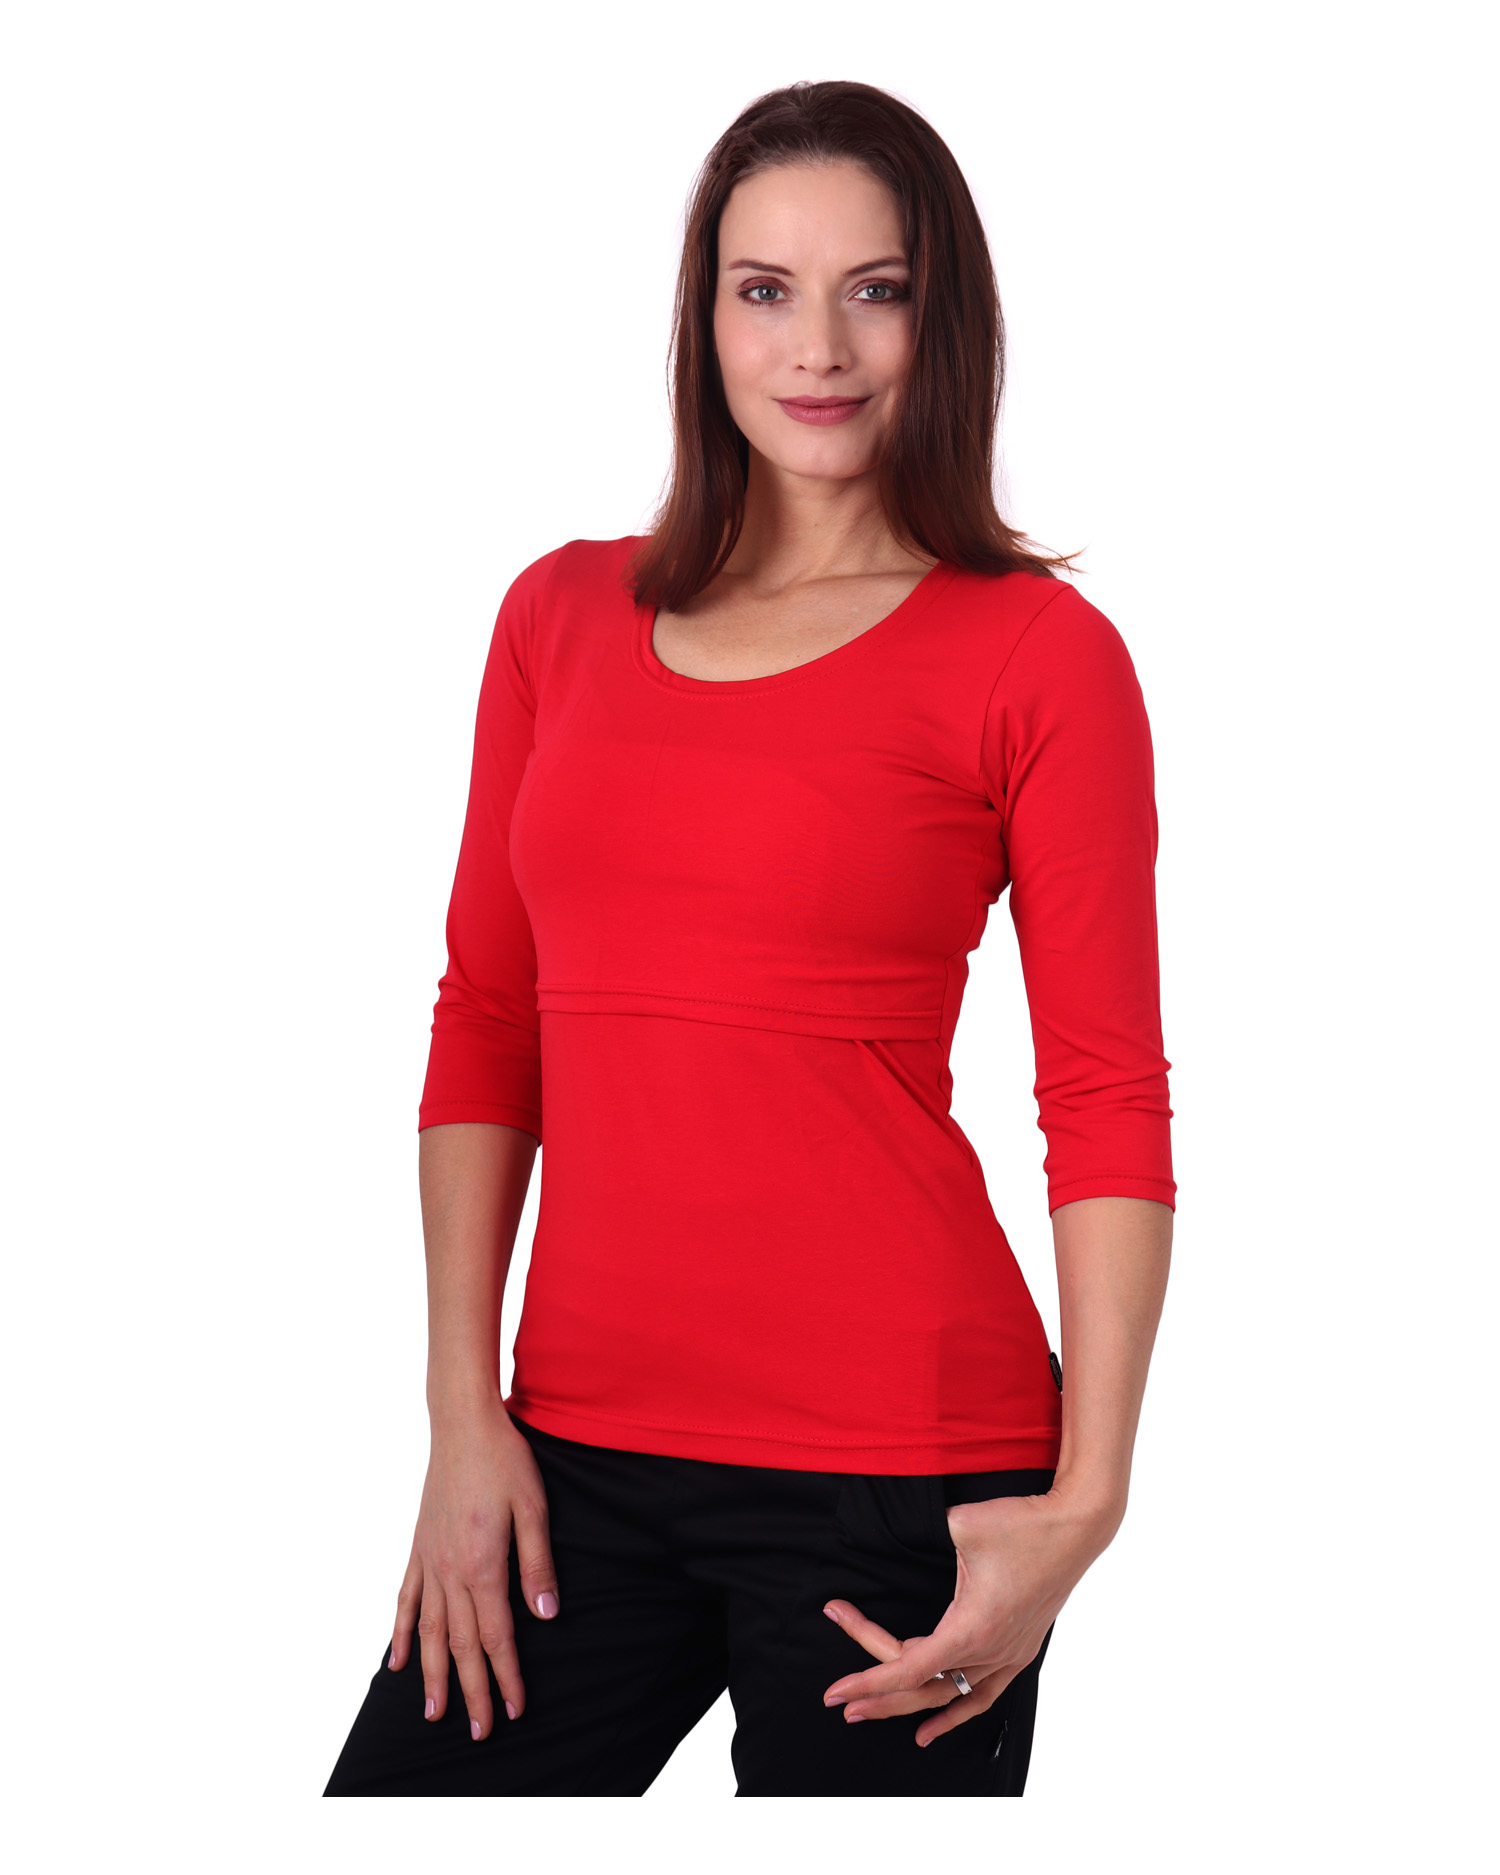 Breast-feeding T-shirt 01 Katerina, 3/4 sleeves, RED